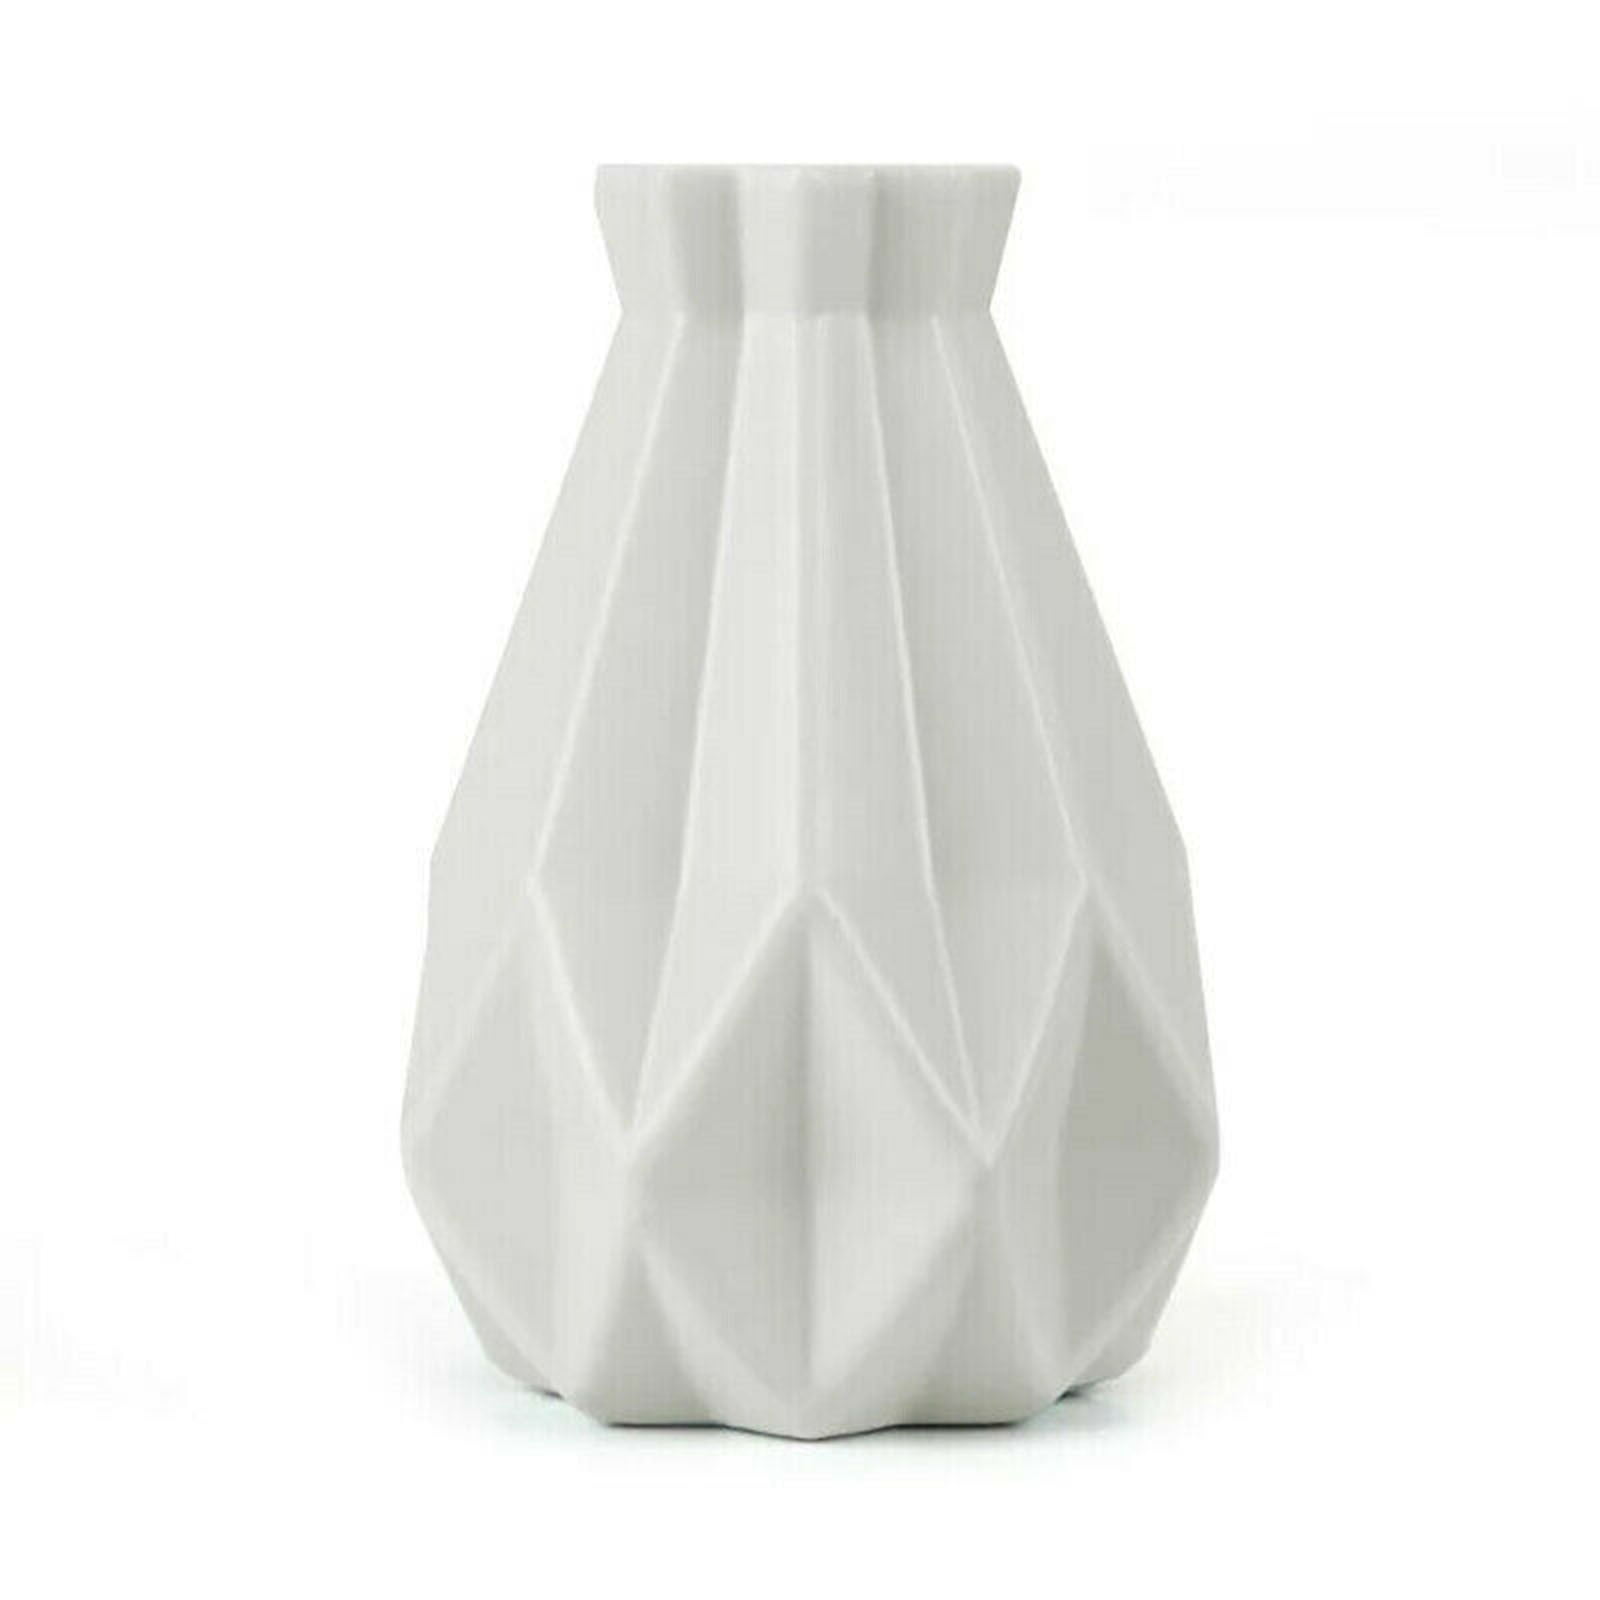 Miayilima Desktop Ornament New Origamis Plastic Vase White Imitation ...